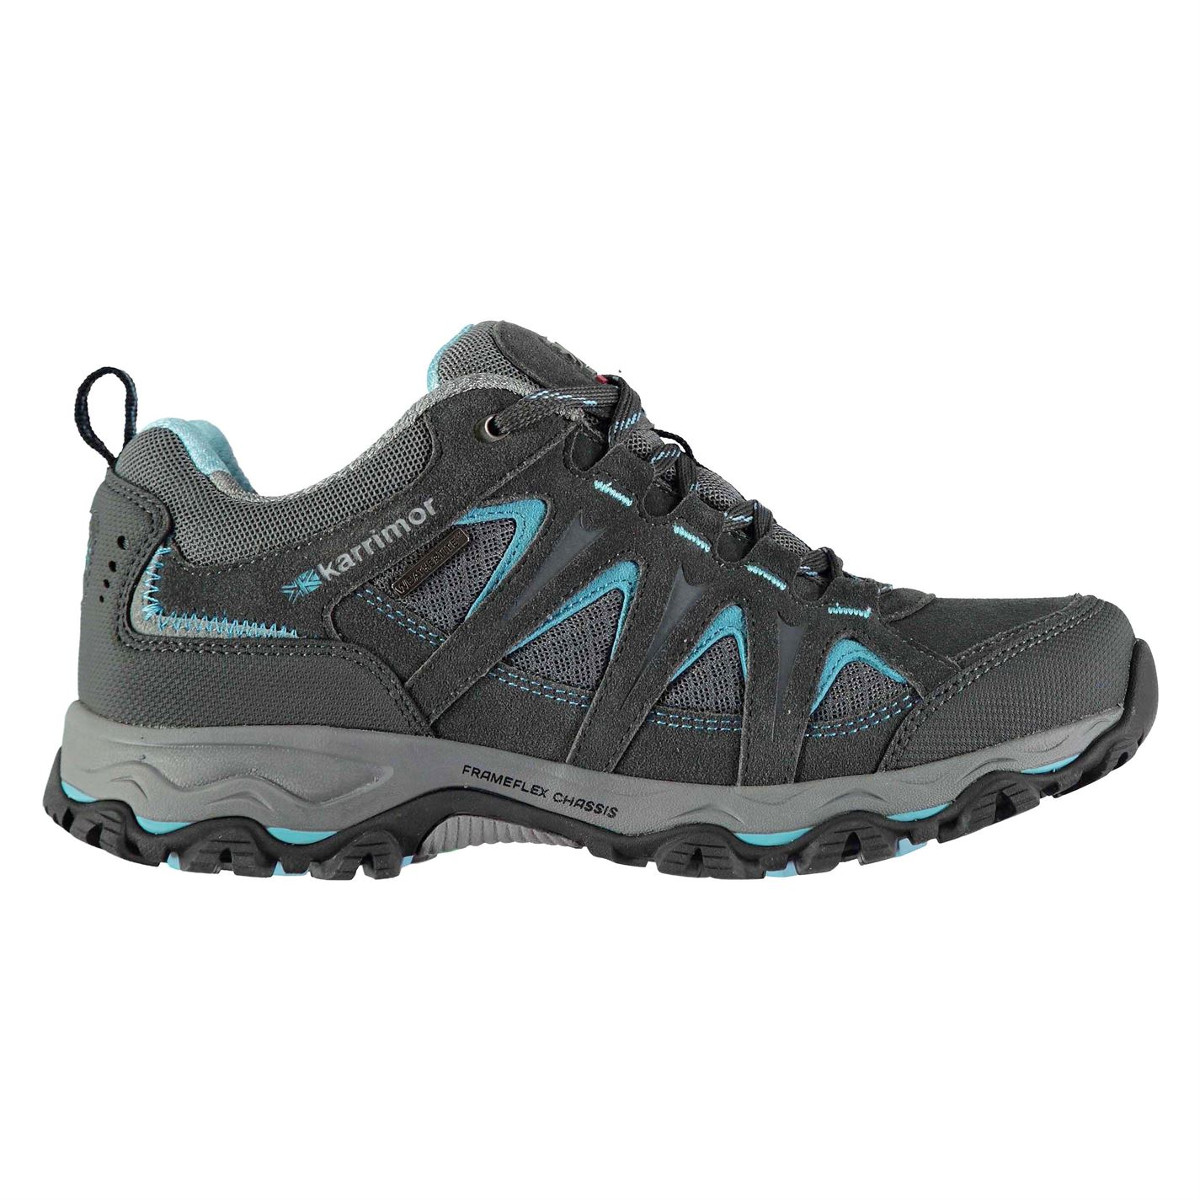 Karrimor Women's Mount Low Waterproof Hiking Shoes